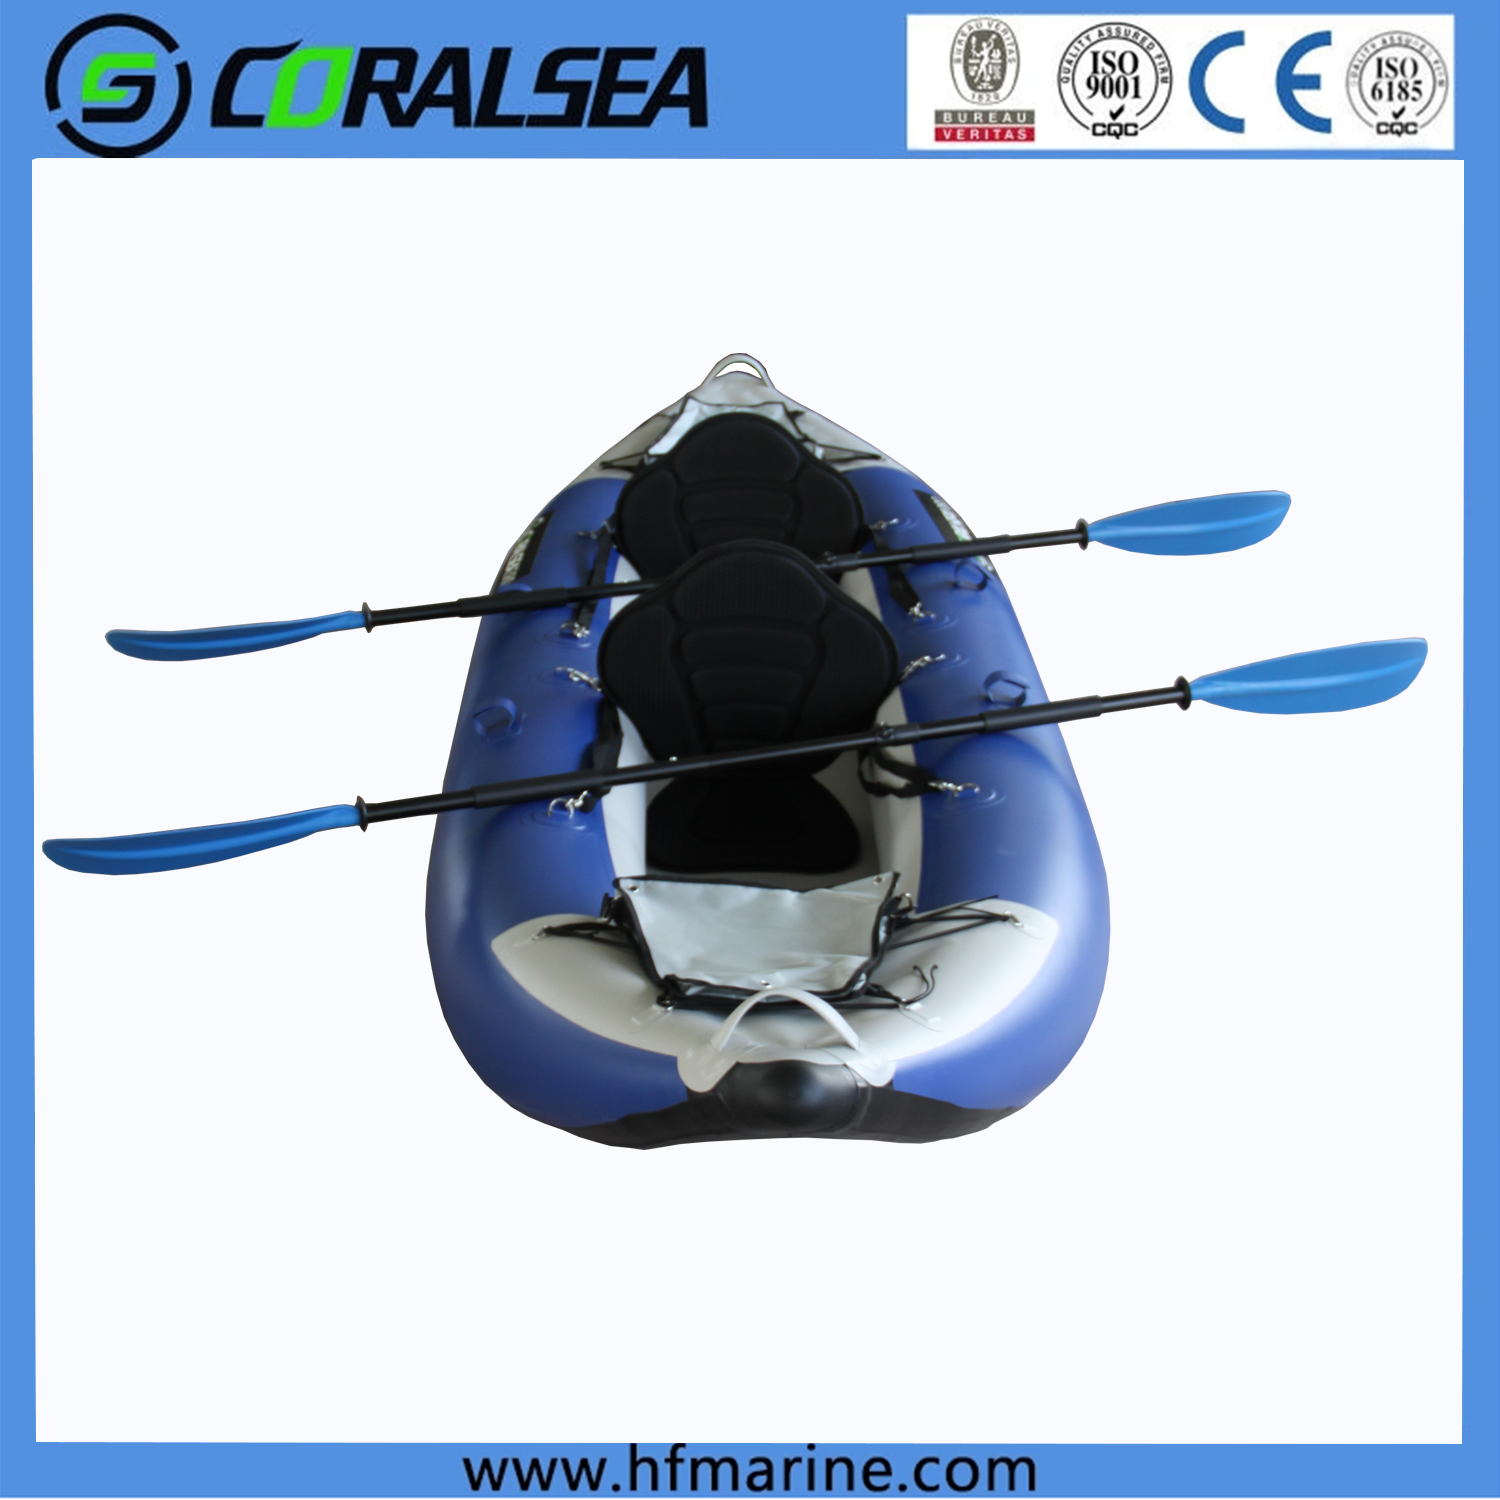 Kayak Fishing Accessories - Boat Accessories - AliExpress